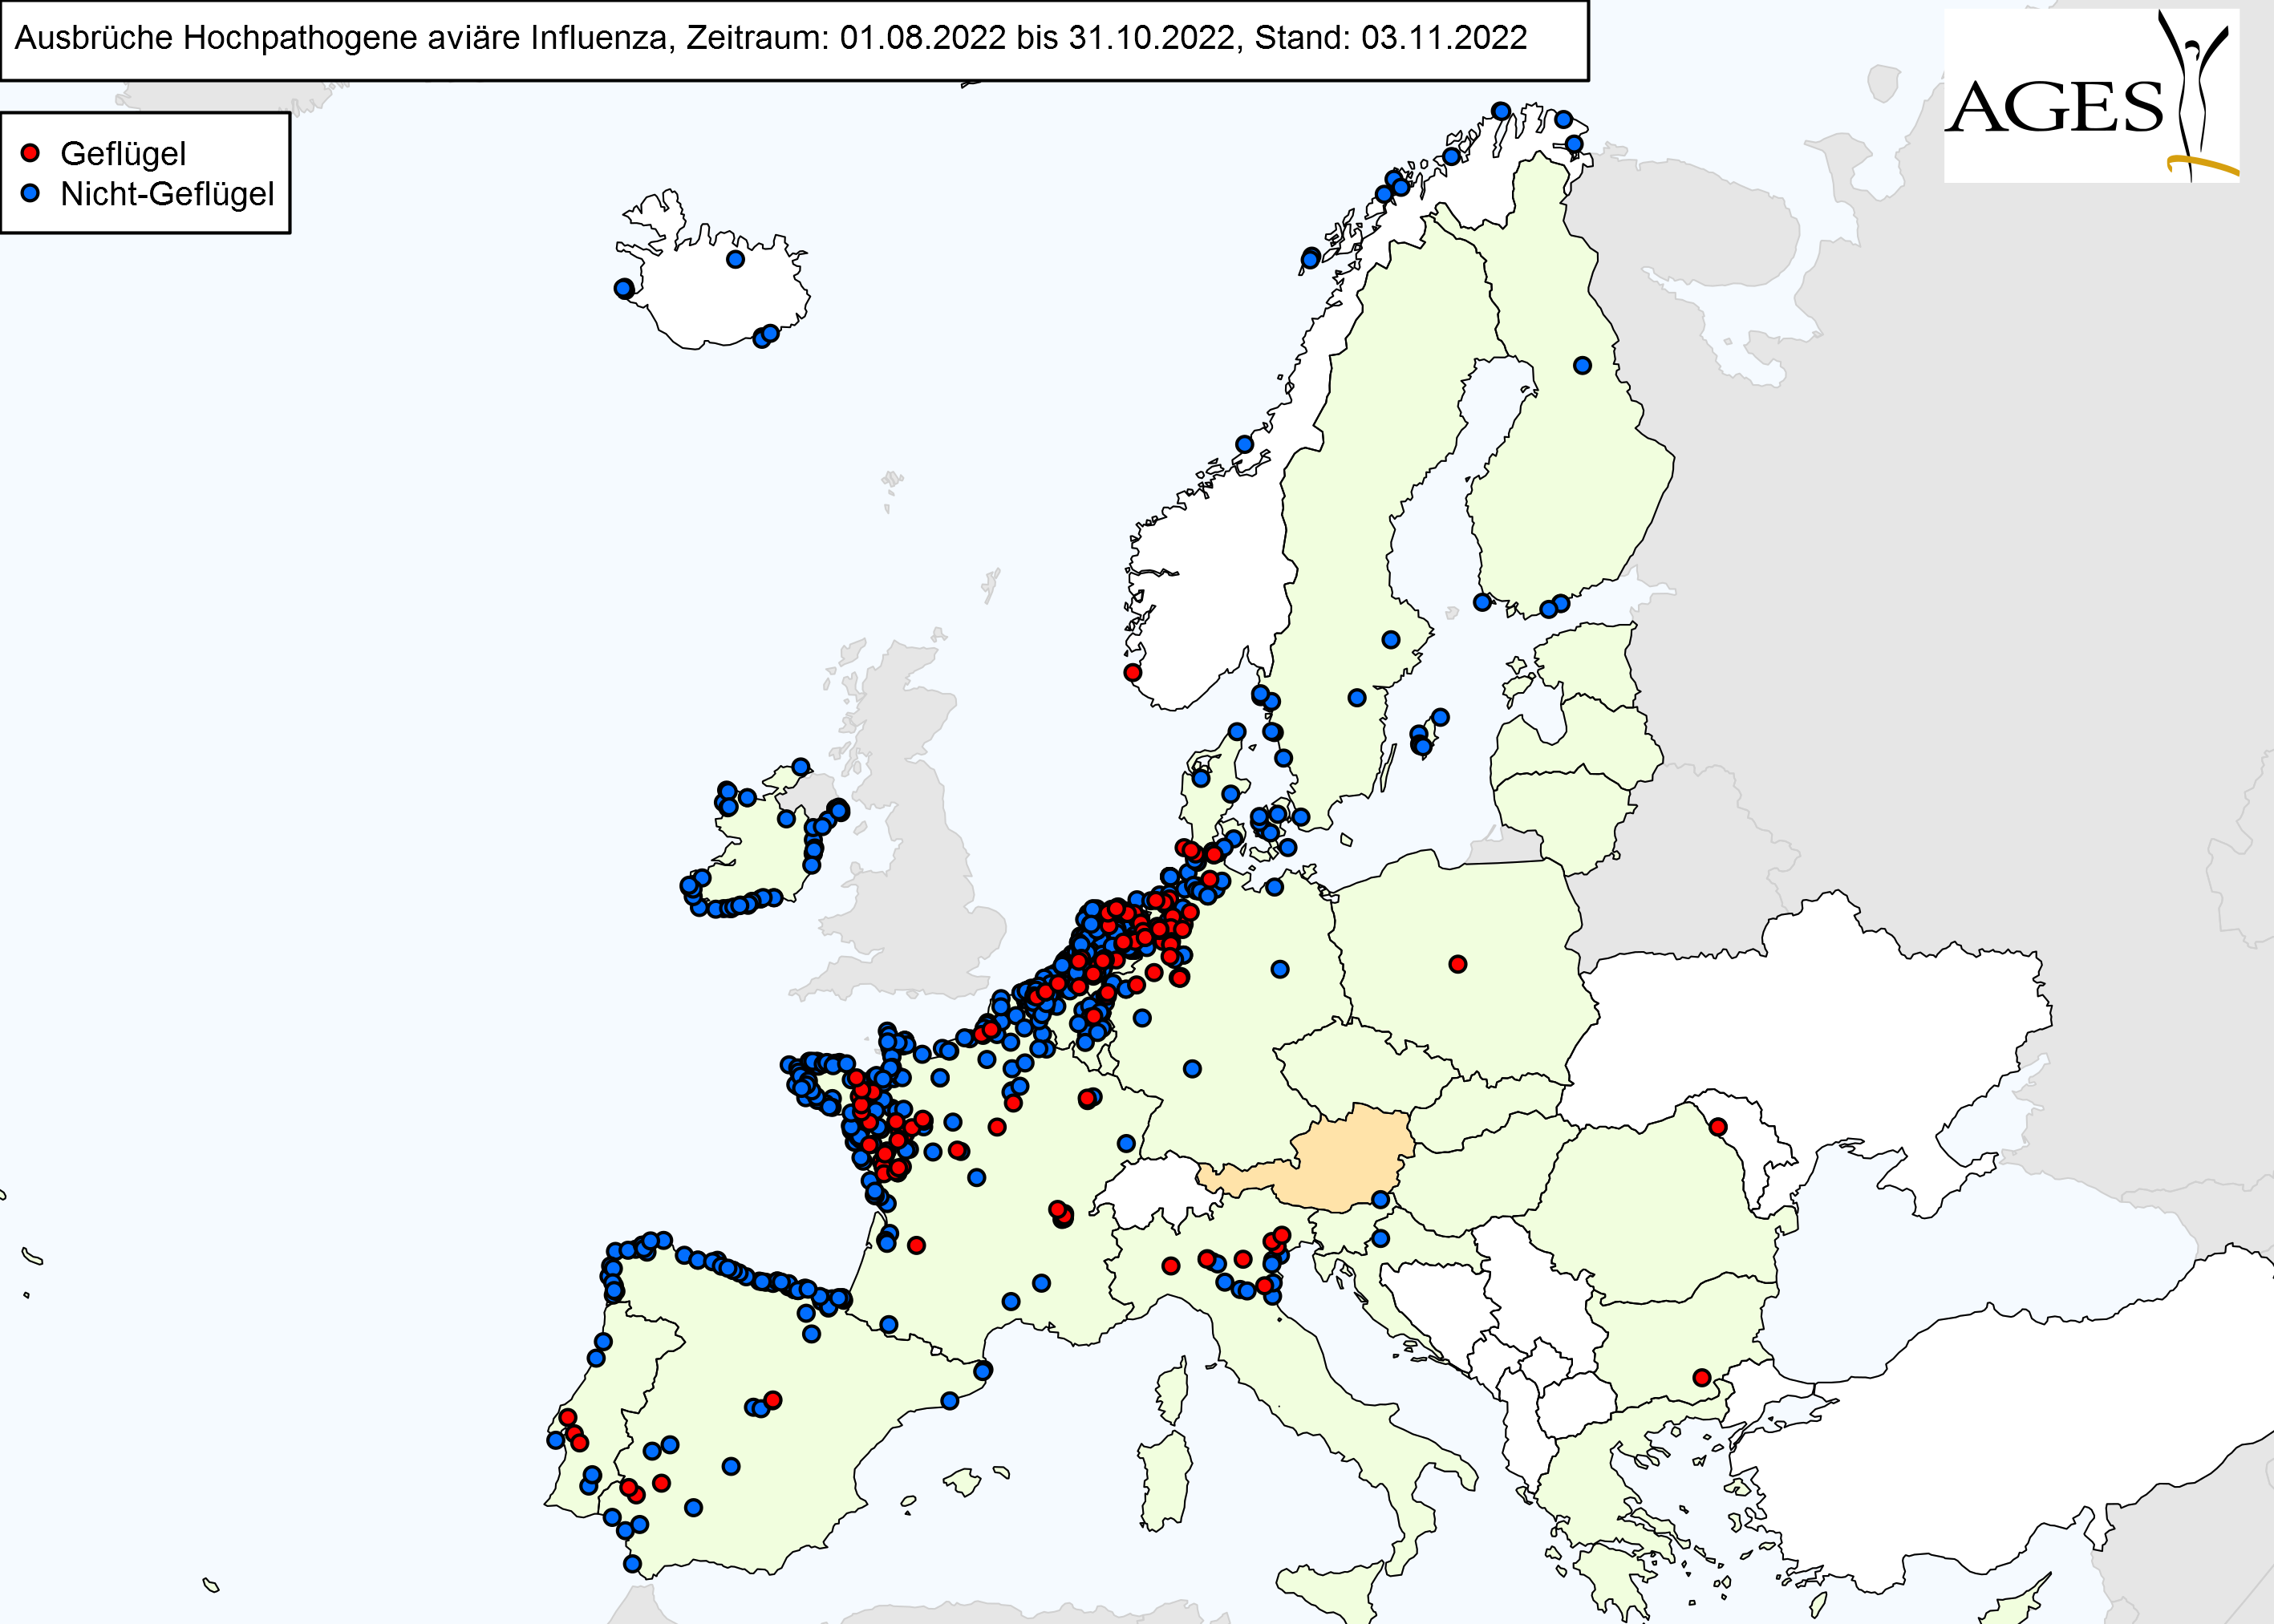 Europakarte zu HPAI-Fällen wie in "Situation in Europa" beschrieben.